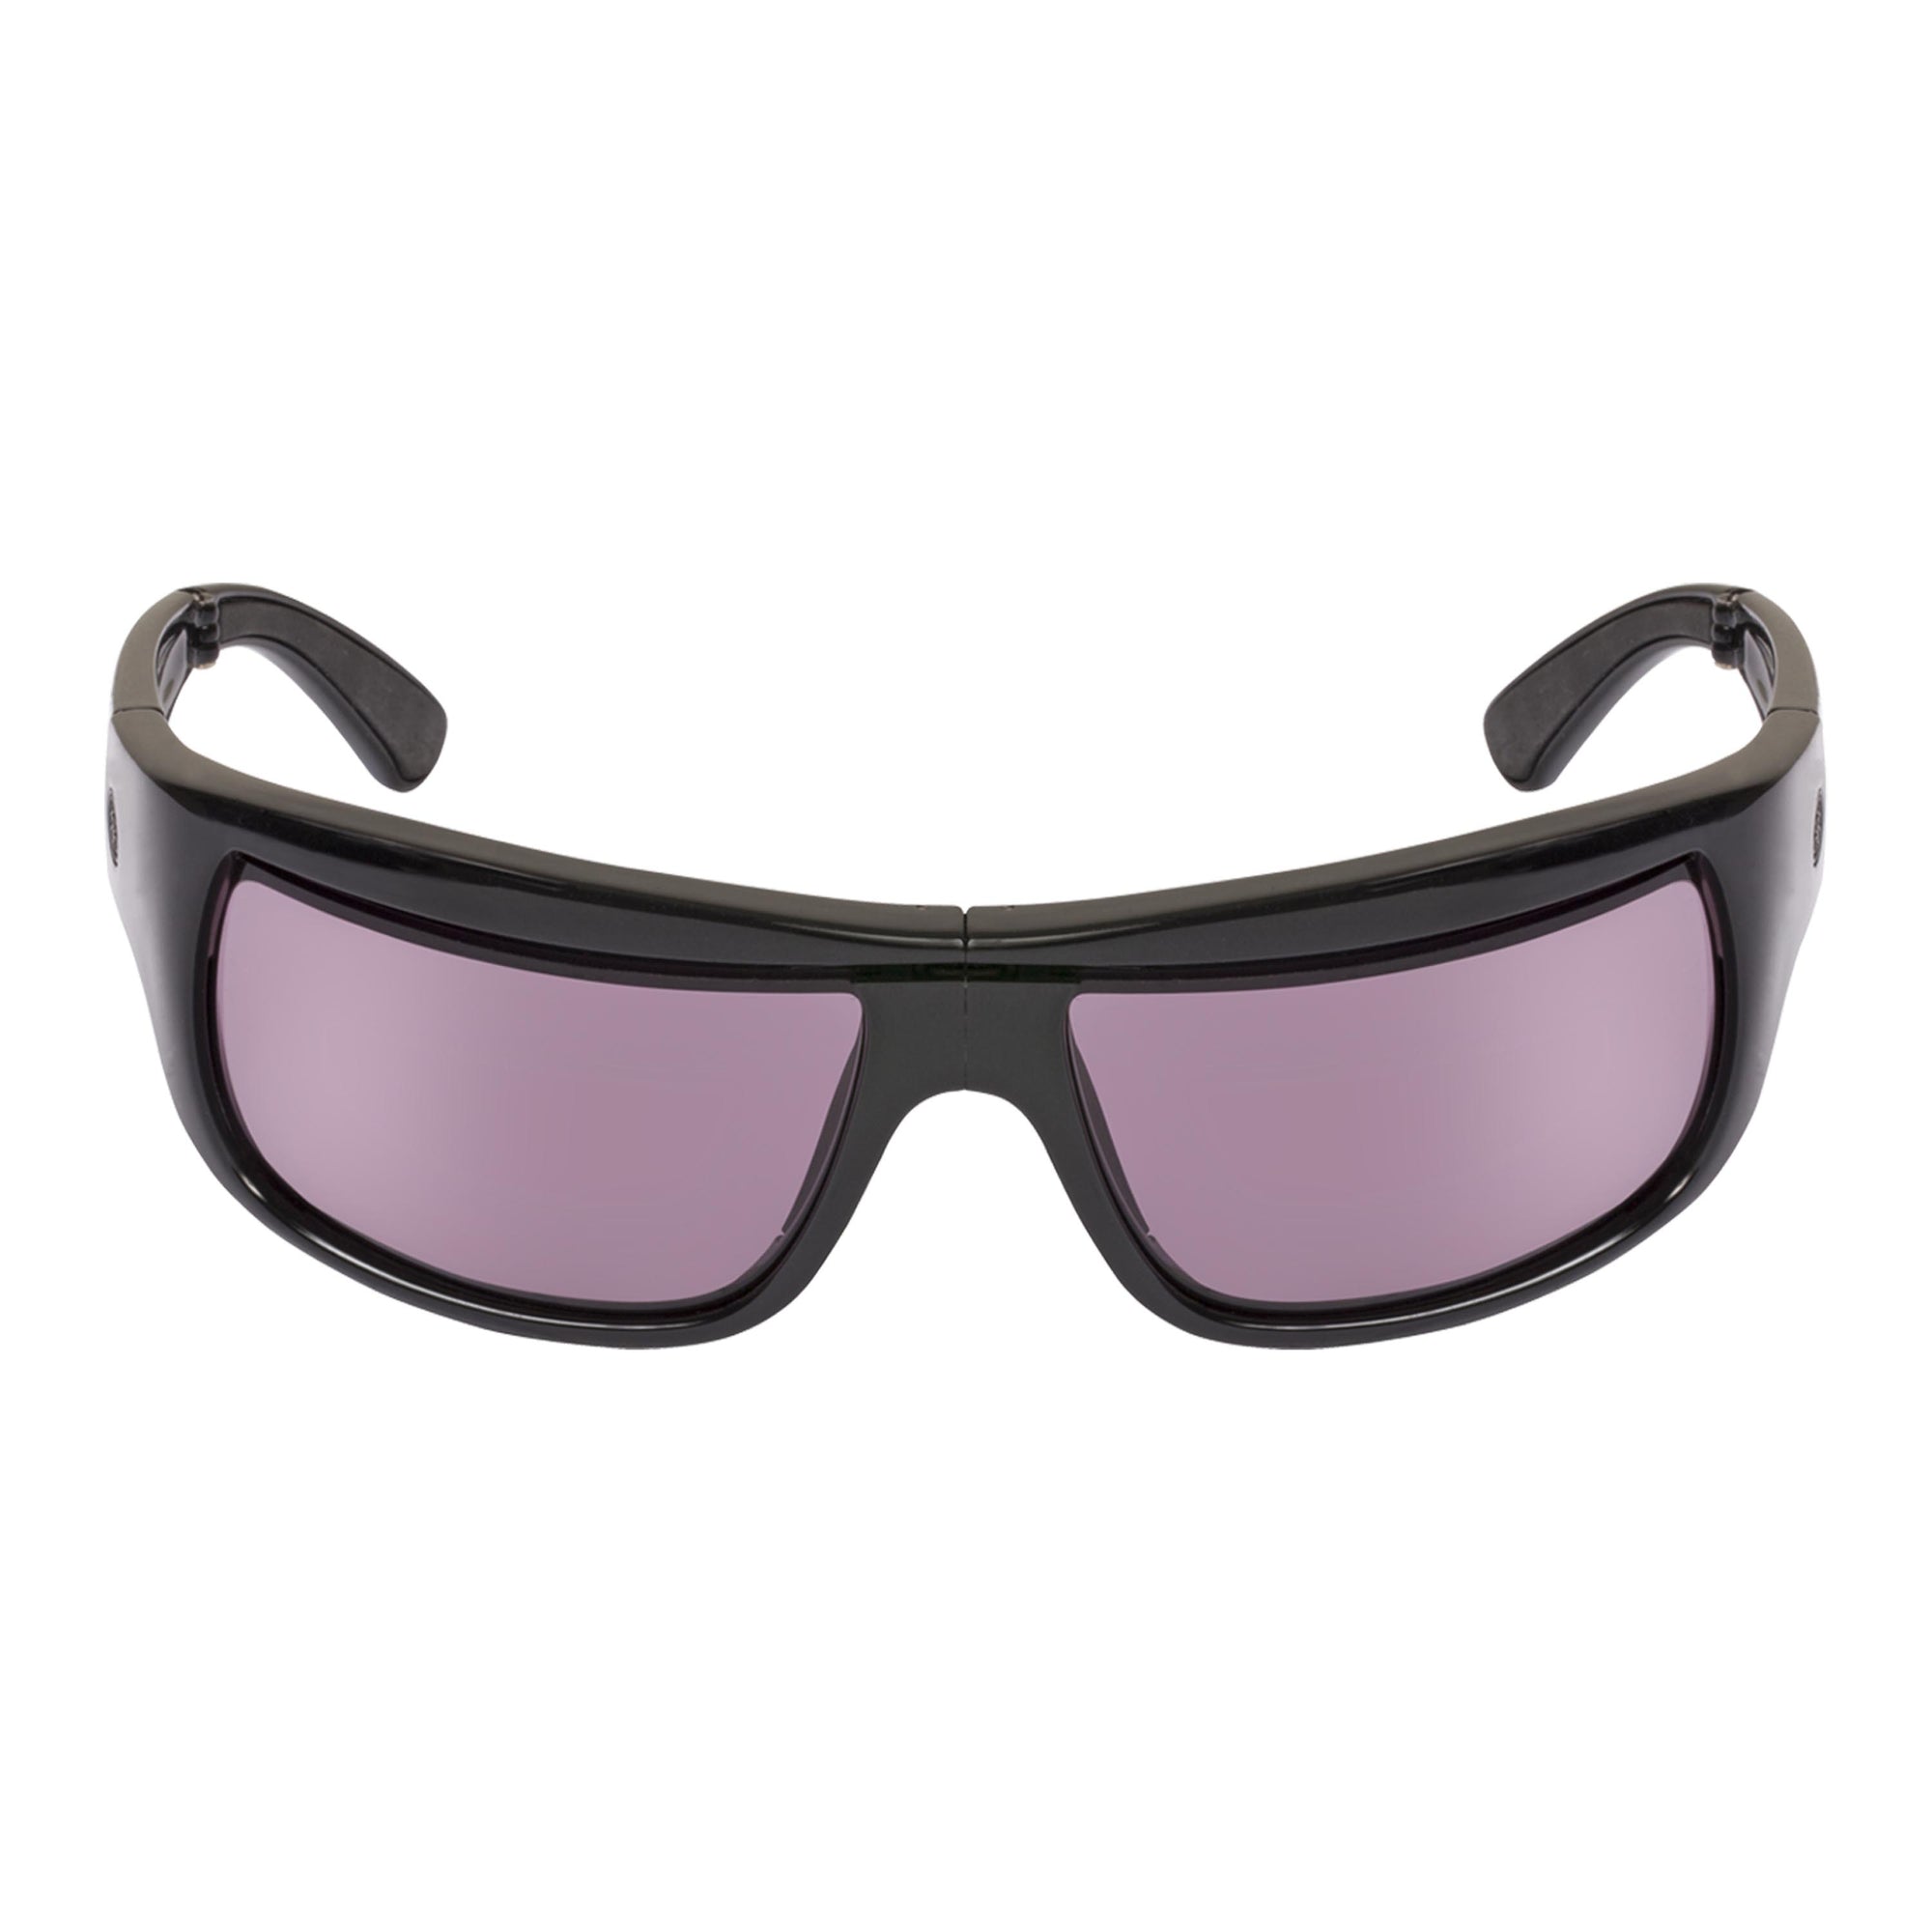 Popticals, Premium Compact Sunglasses, PopH2O, 200070-BGVS, Polarized Sunglasses, Gloss Black Frame, Violet Golf Lenses, Glam View